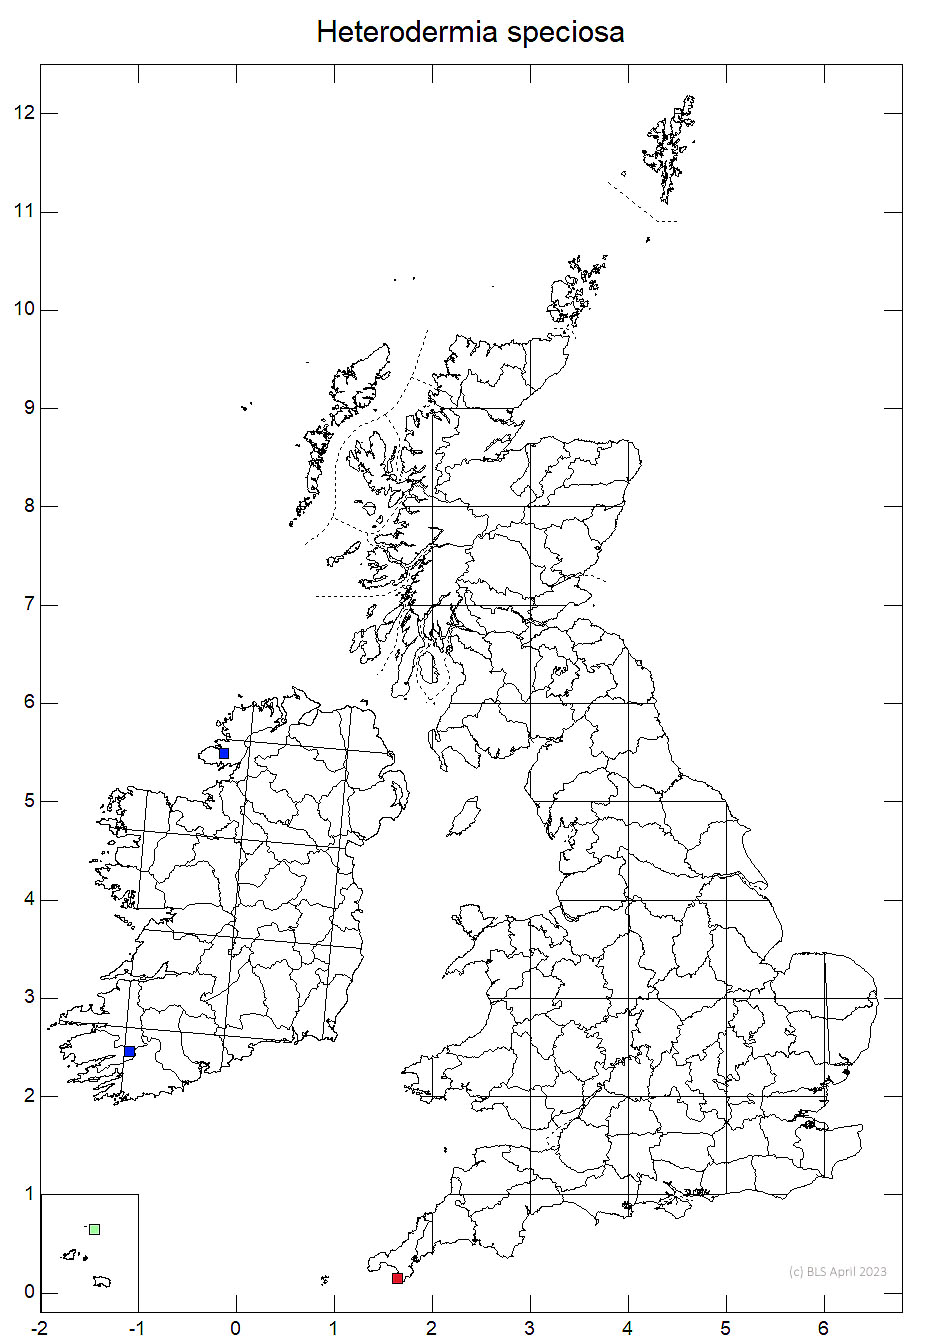 Heterodermia speciosa 10km sq distribution map